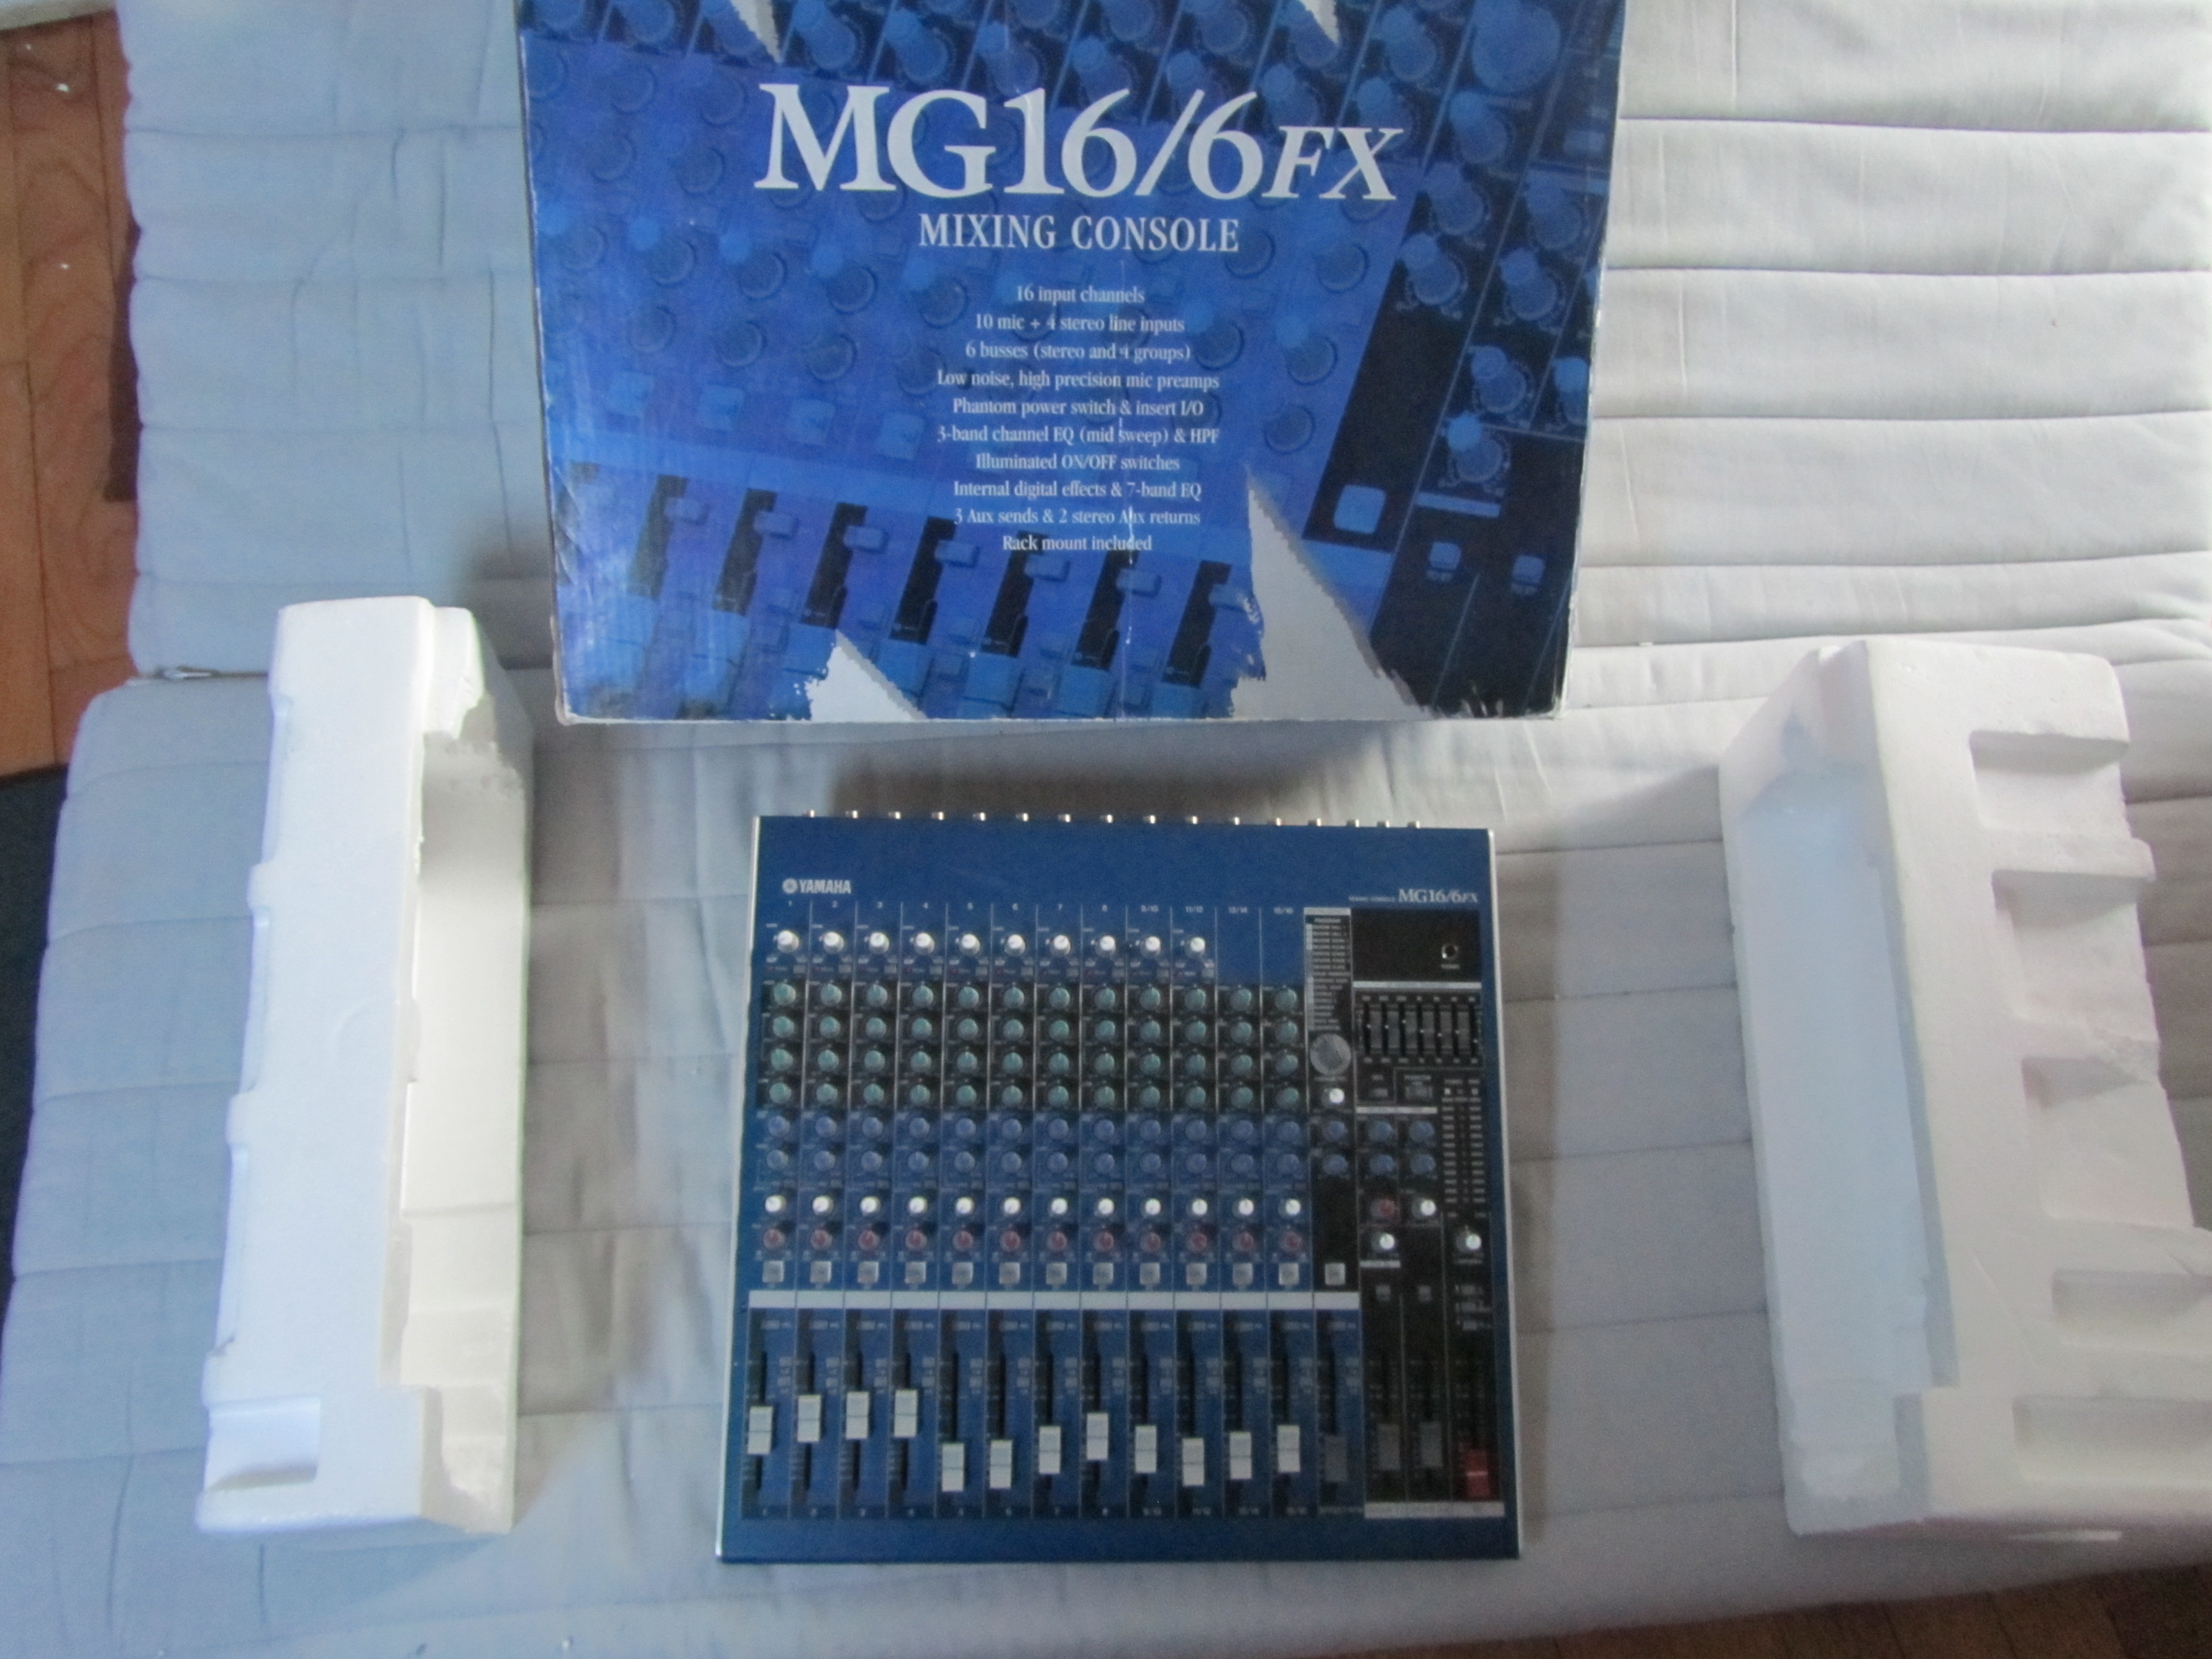 Yamaha MG16/6FX image (#288079) - Audiofanzine